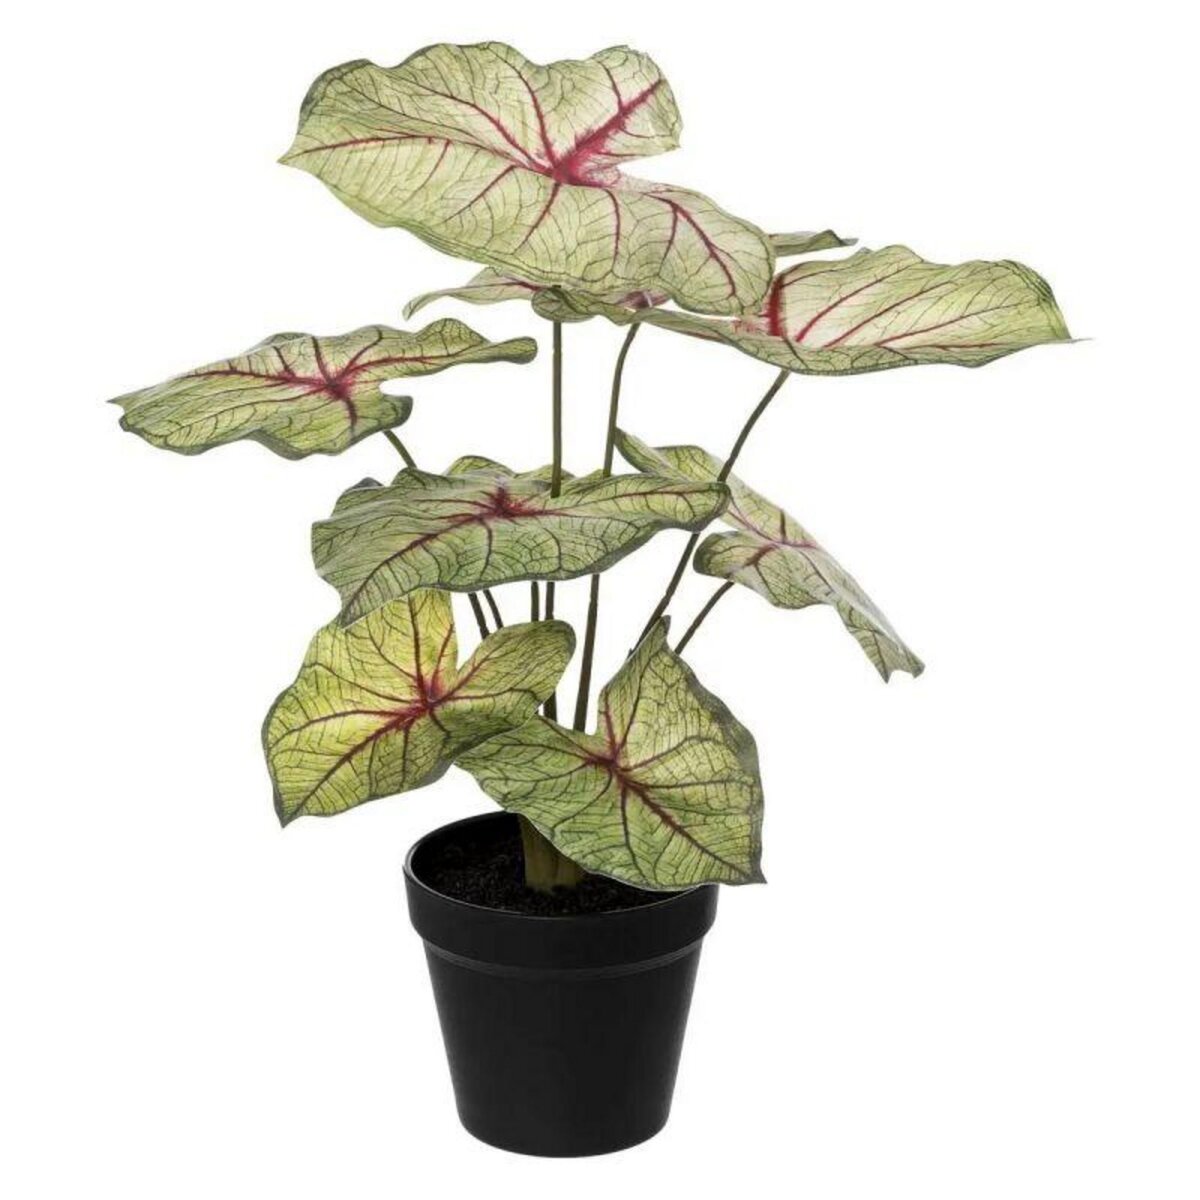  Plante Artificielle en Pot  Caladium  41cm Vert Clair